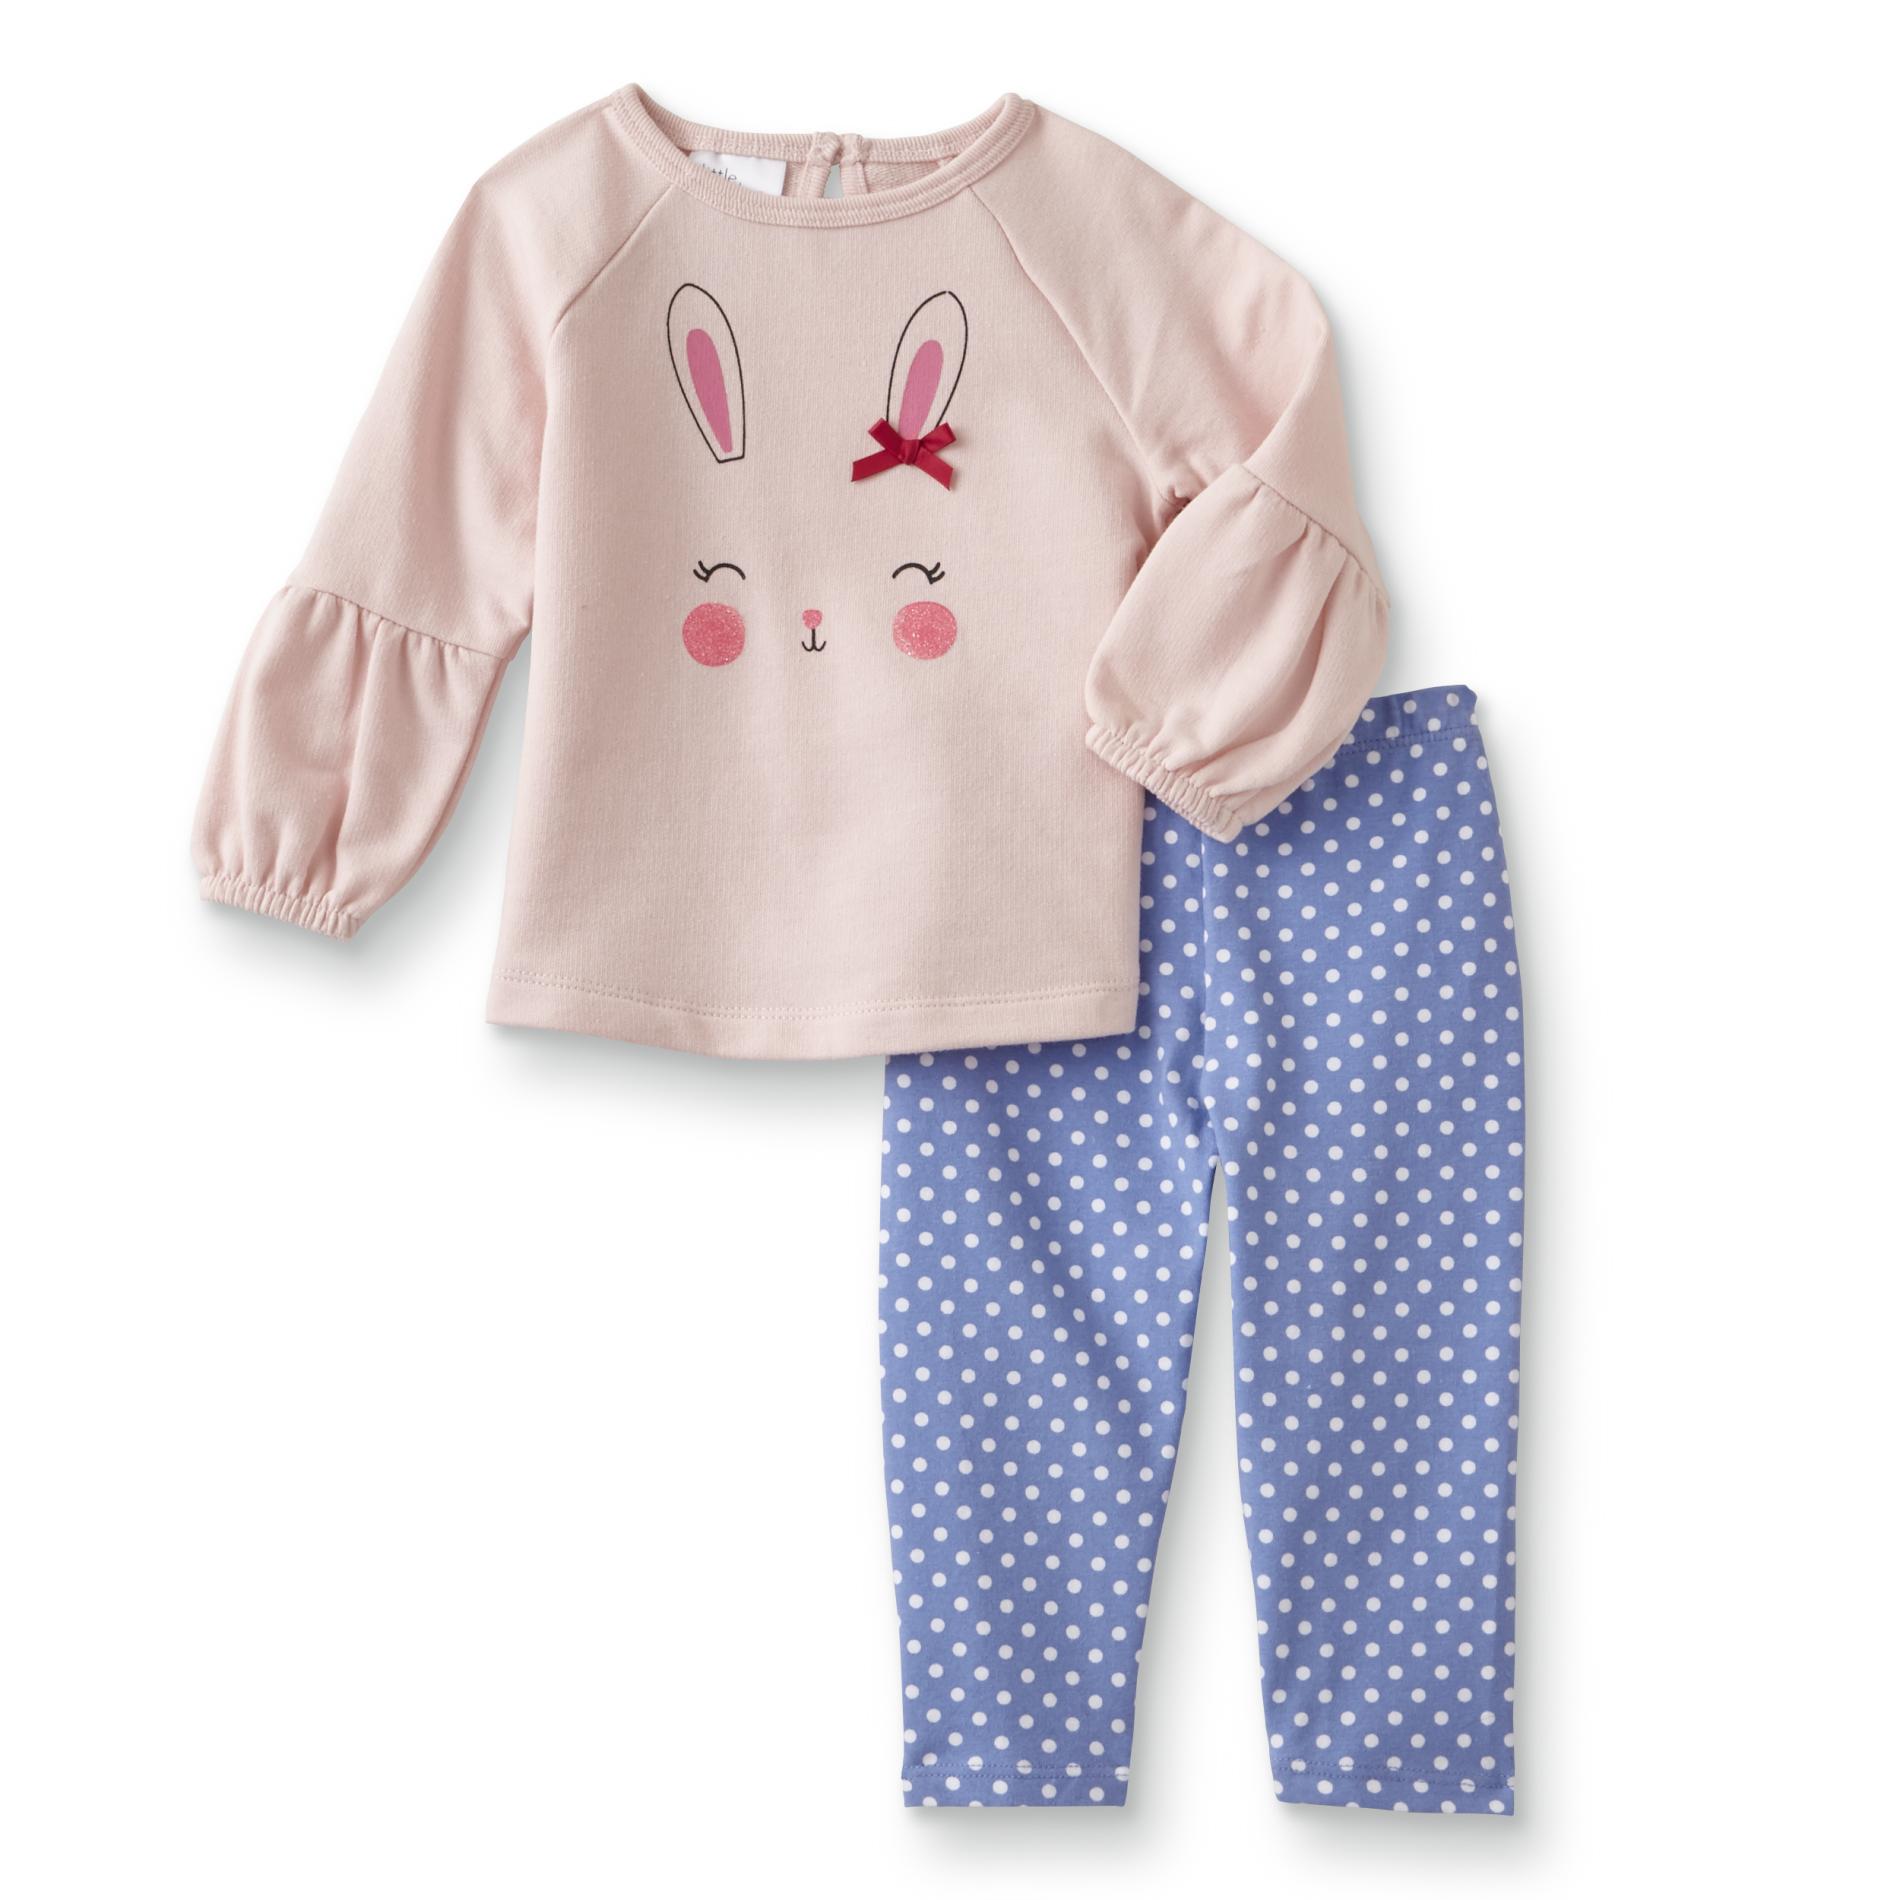 Little Wonders Infant Girls' Long-Sleeve Top & Leggings - Bunny